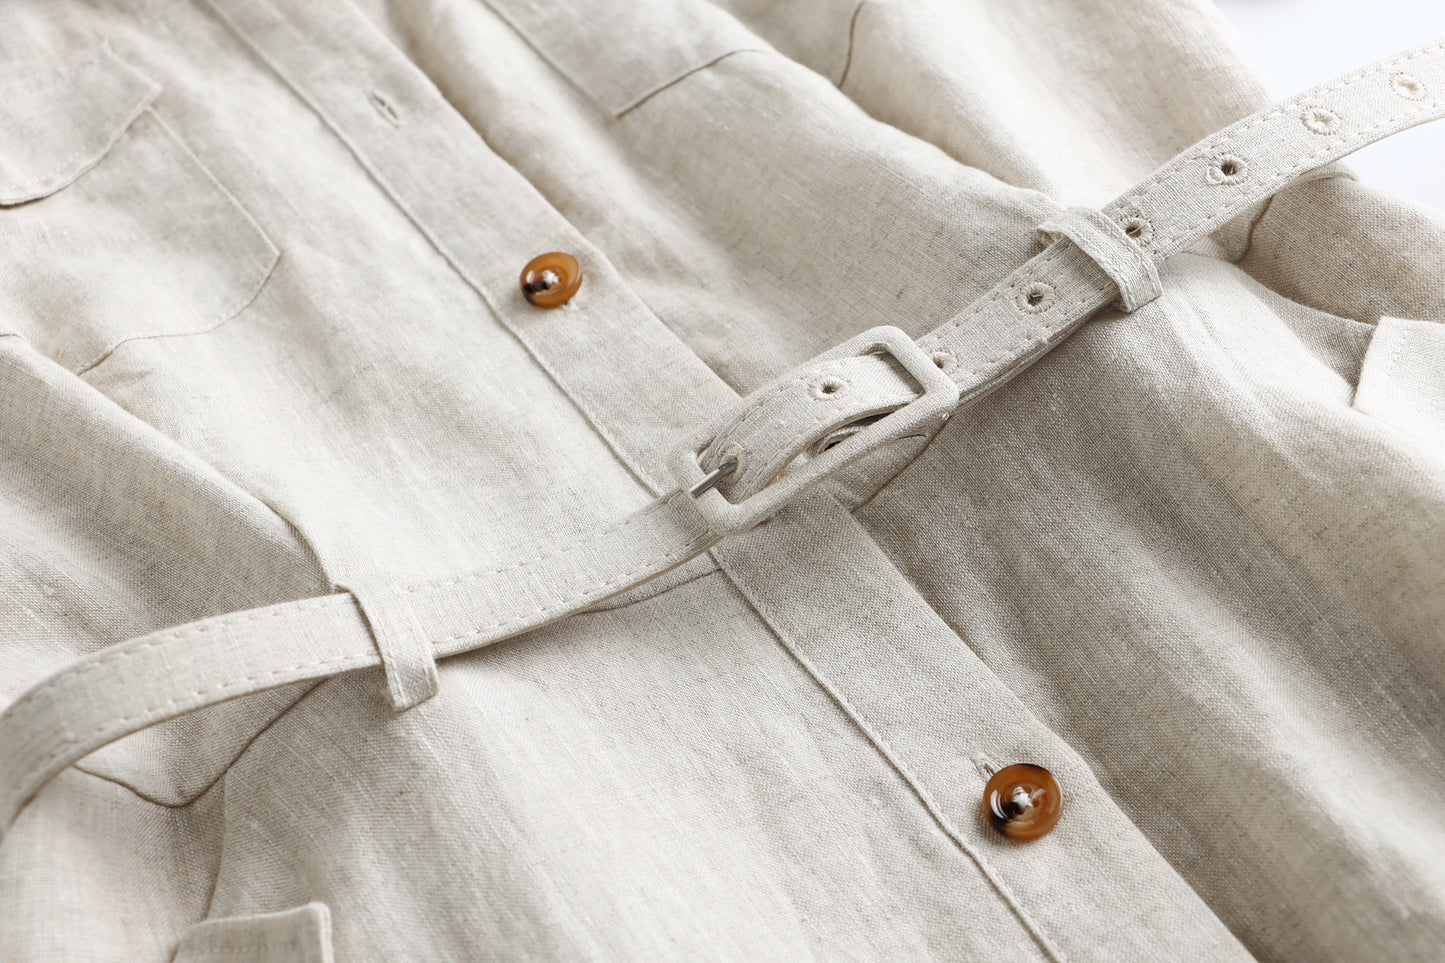 Roisin linen cotton belt dress